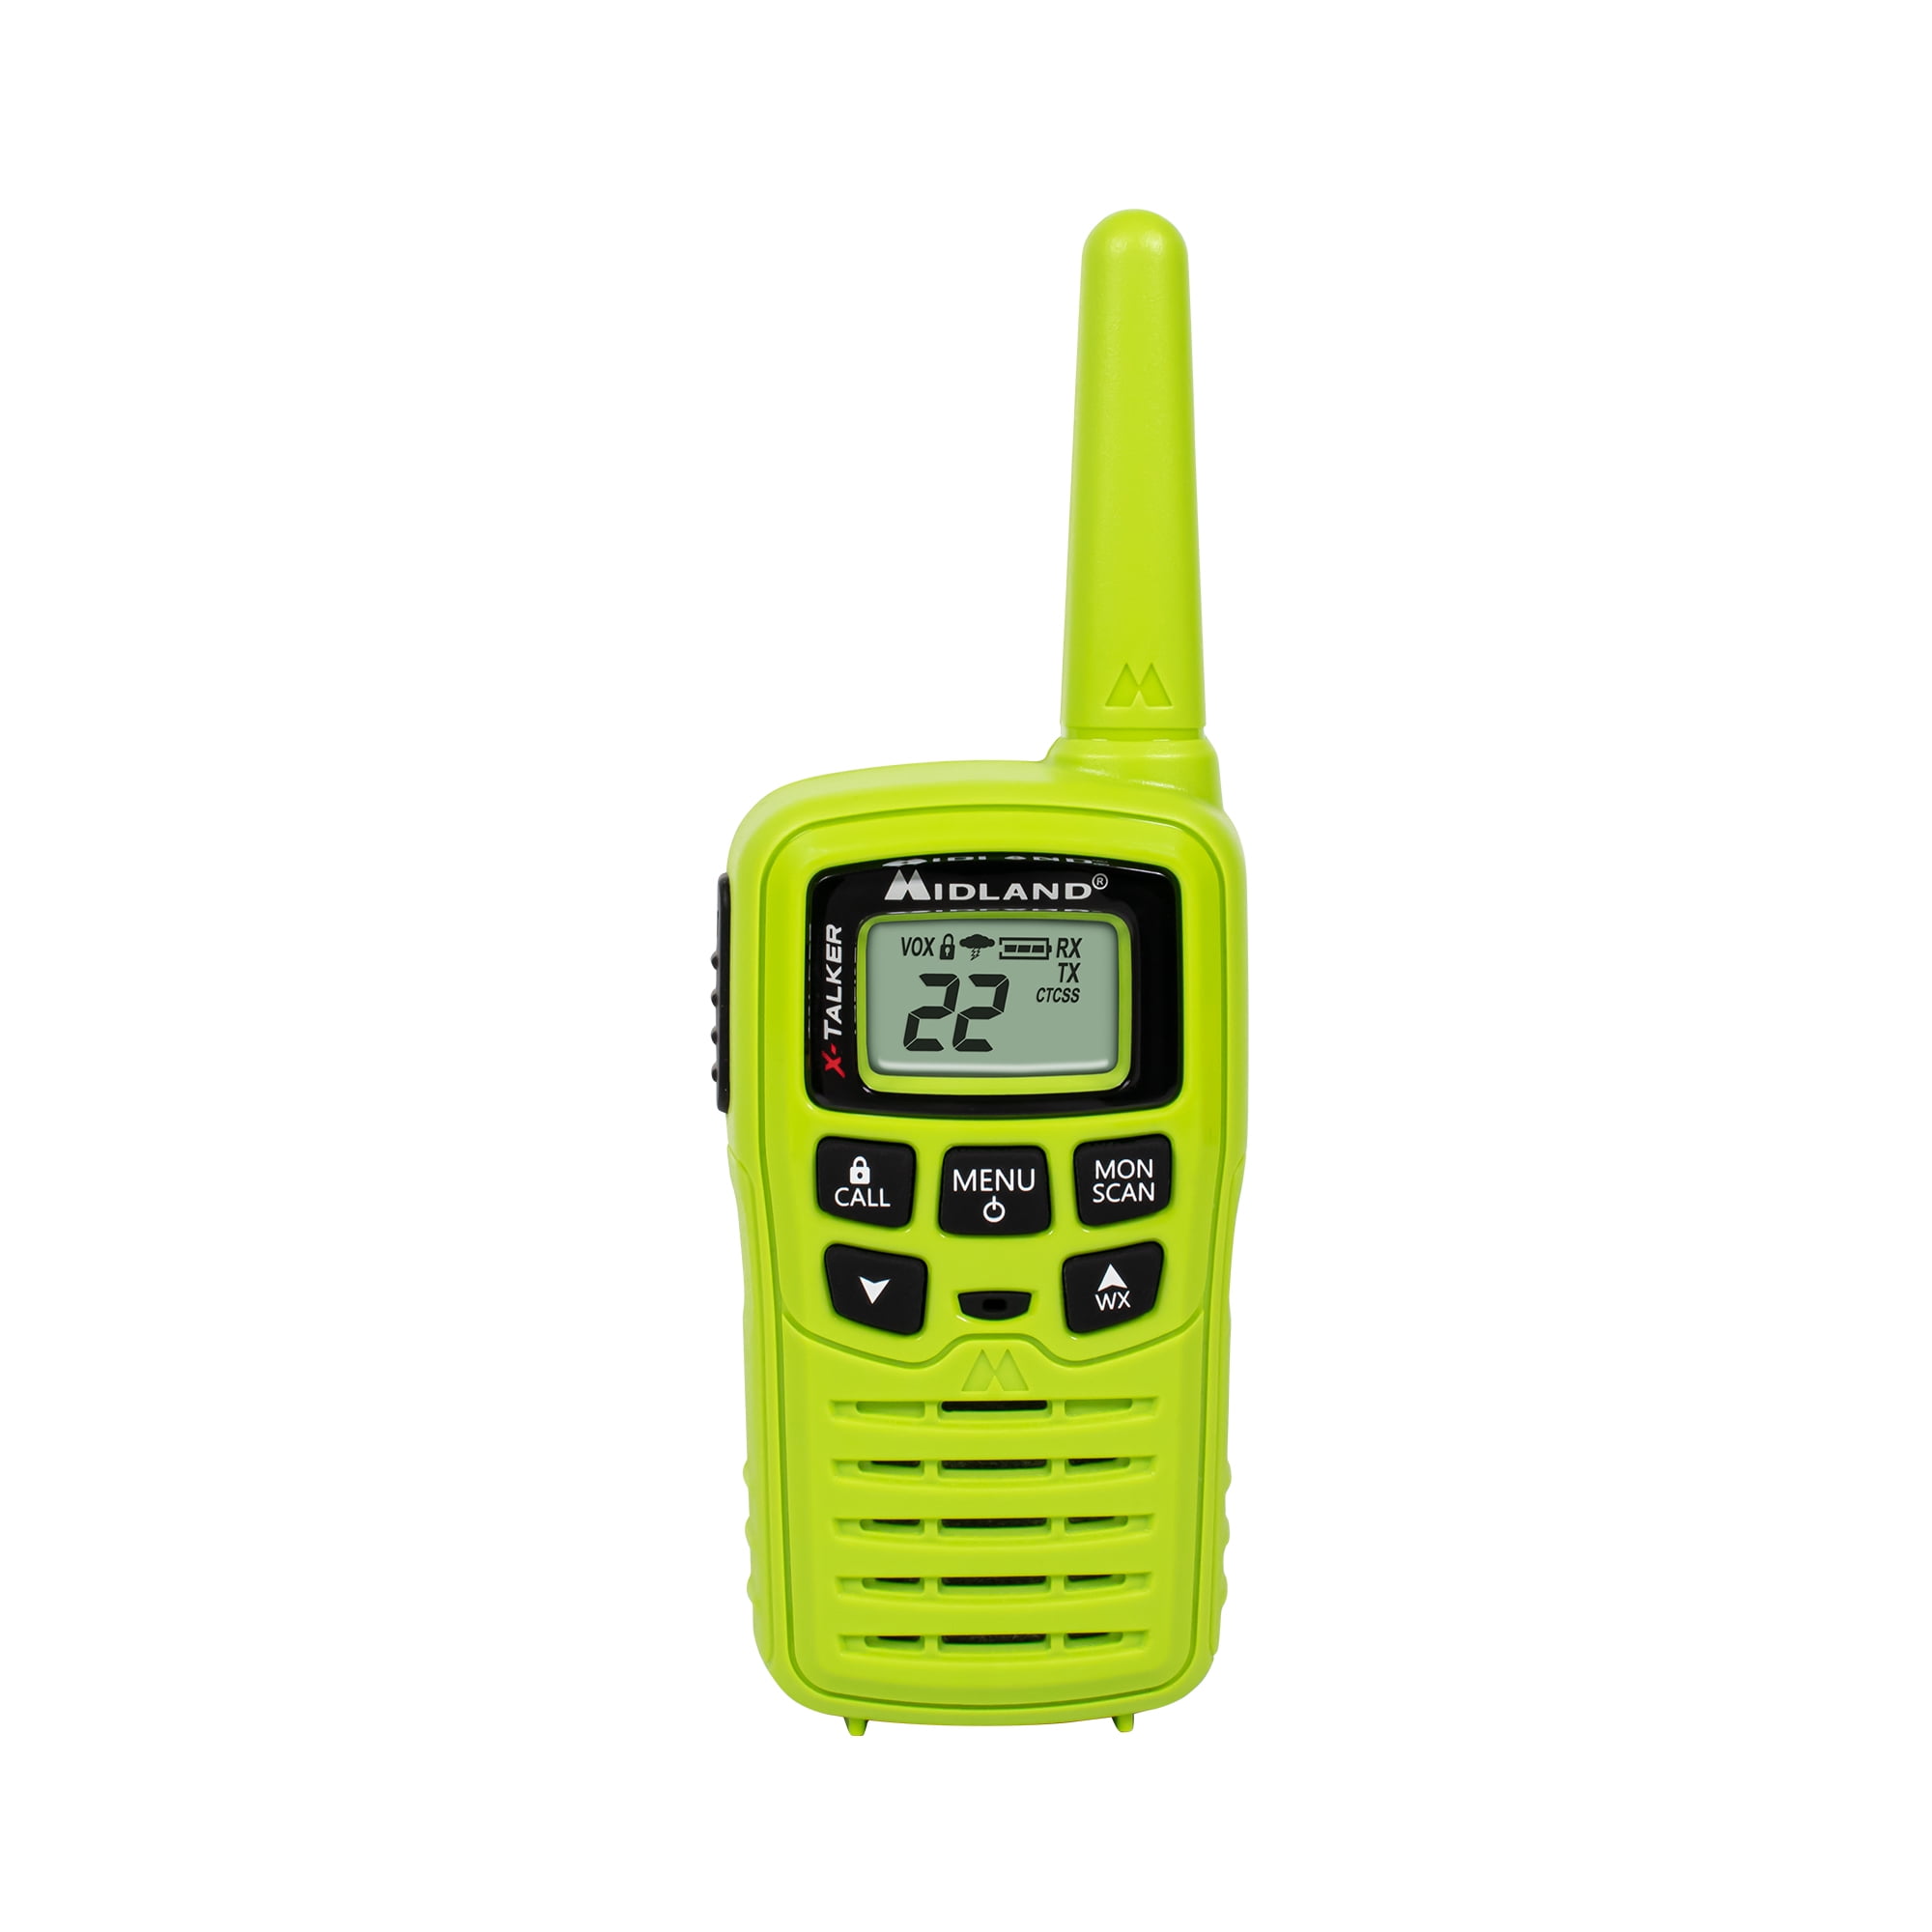 Midland – T10X3M X-Talker Two Way Radio – Water Resistant – NOAA Weather  Alert Radios – 20 Mile Range Multi Color Three Pack